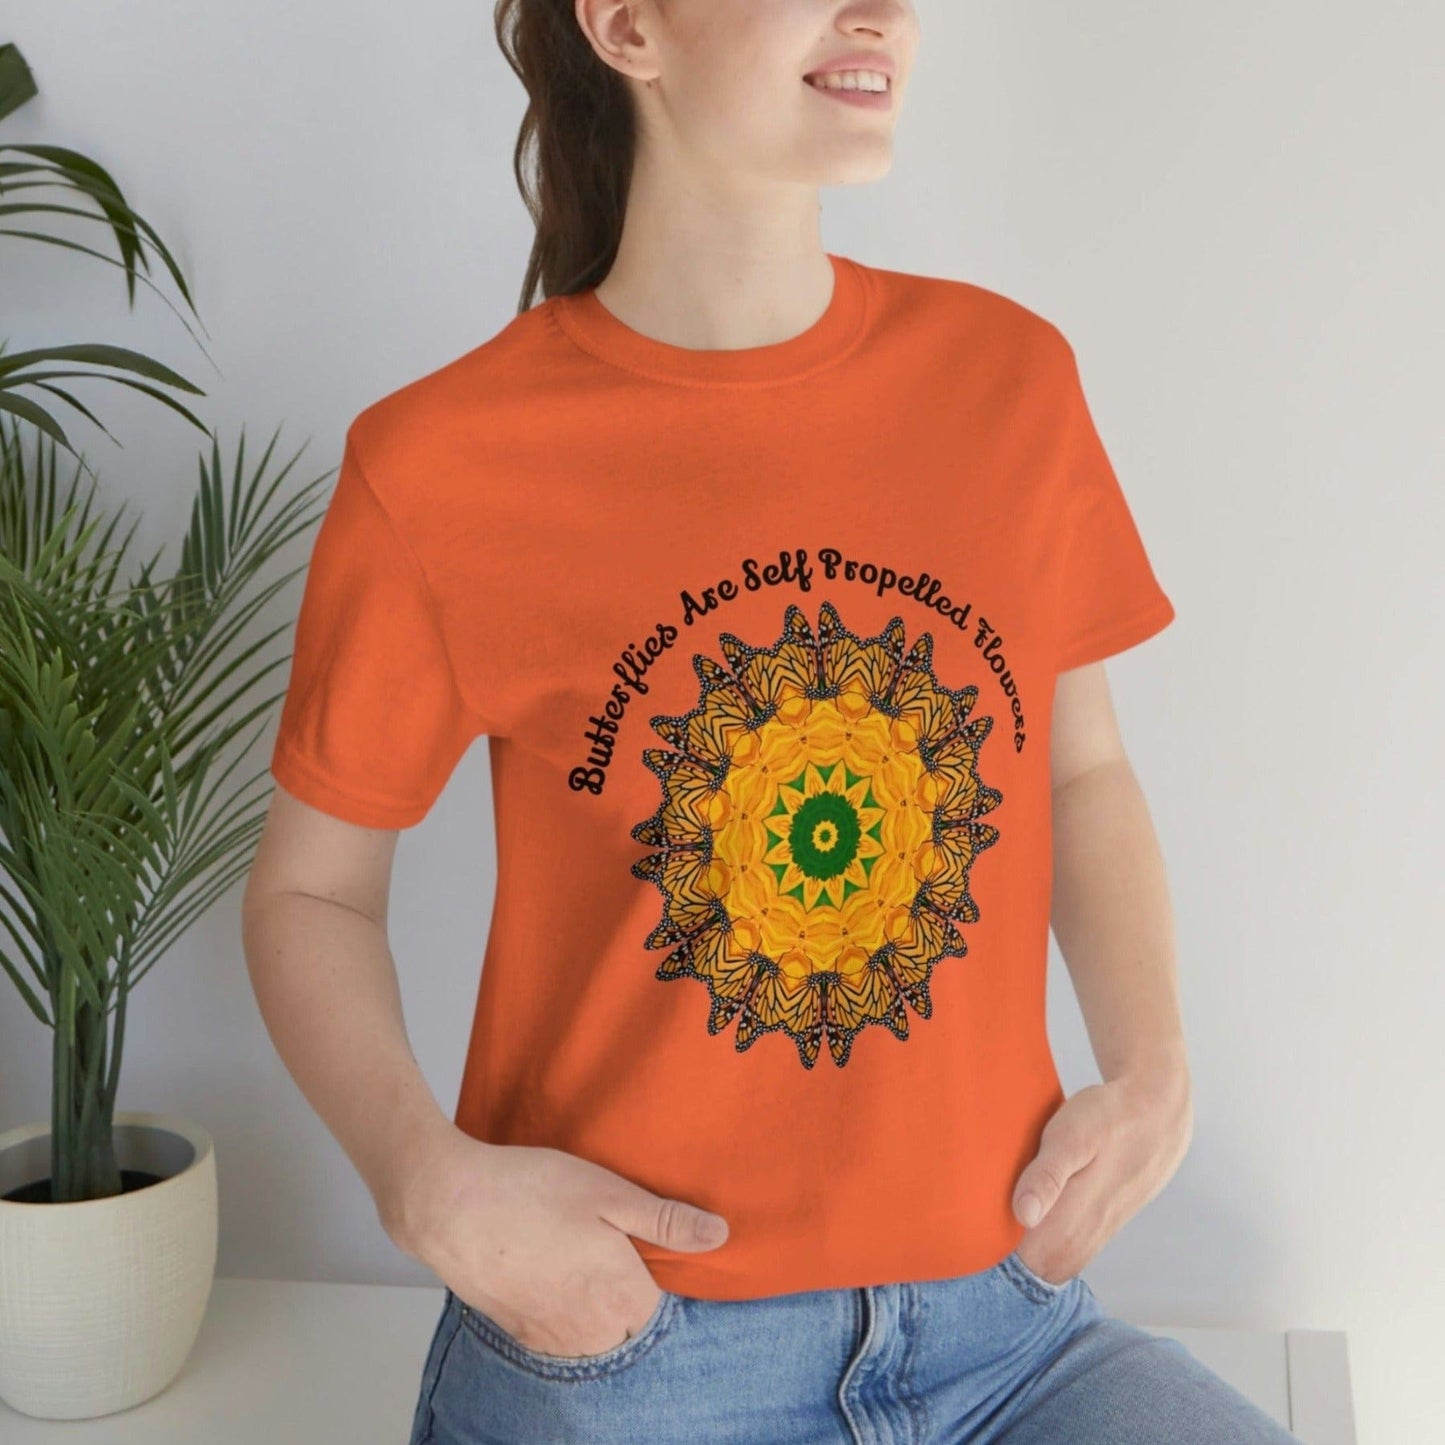 Butterfly Top, Zen Mystical Poet Shirt, Cottage Core Bug, Shirt, Best Selling Shirts, Insect Shirt, Cute Shirts Teens & Women Yoga Shirts 3